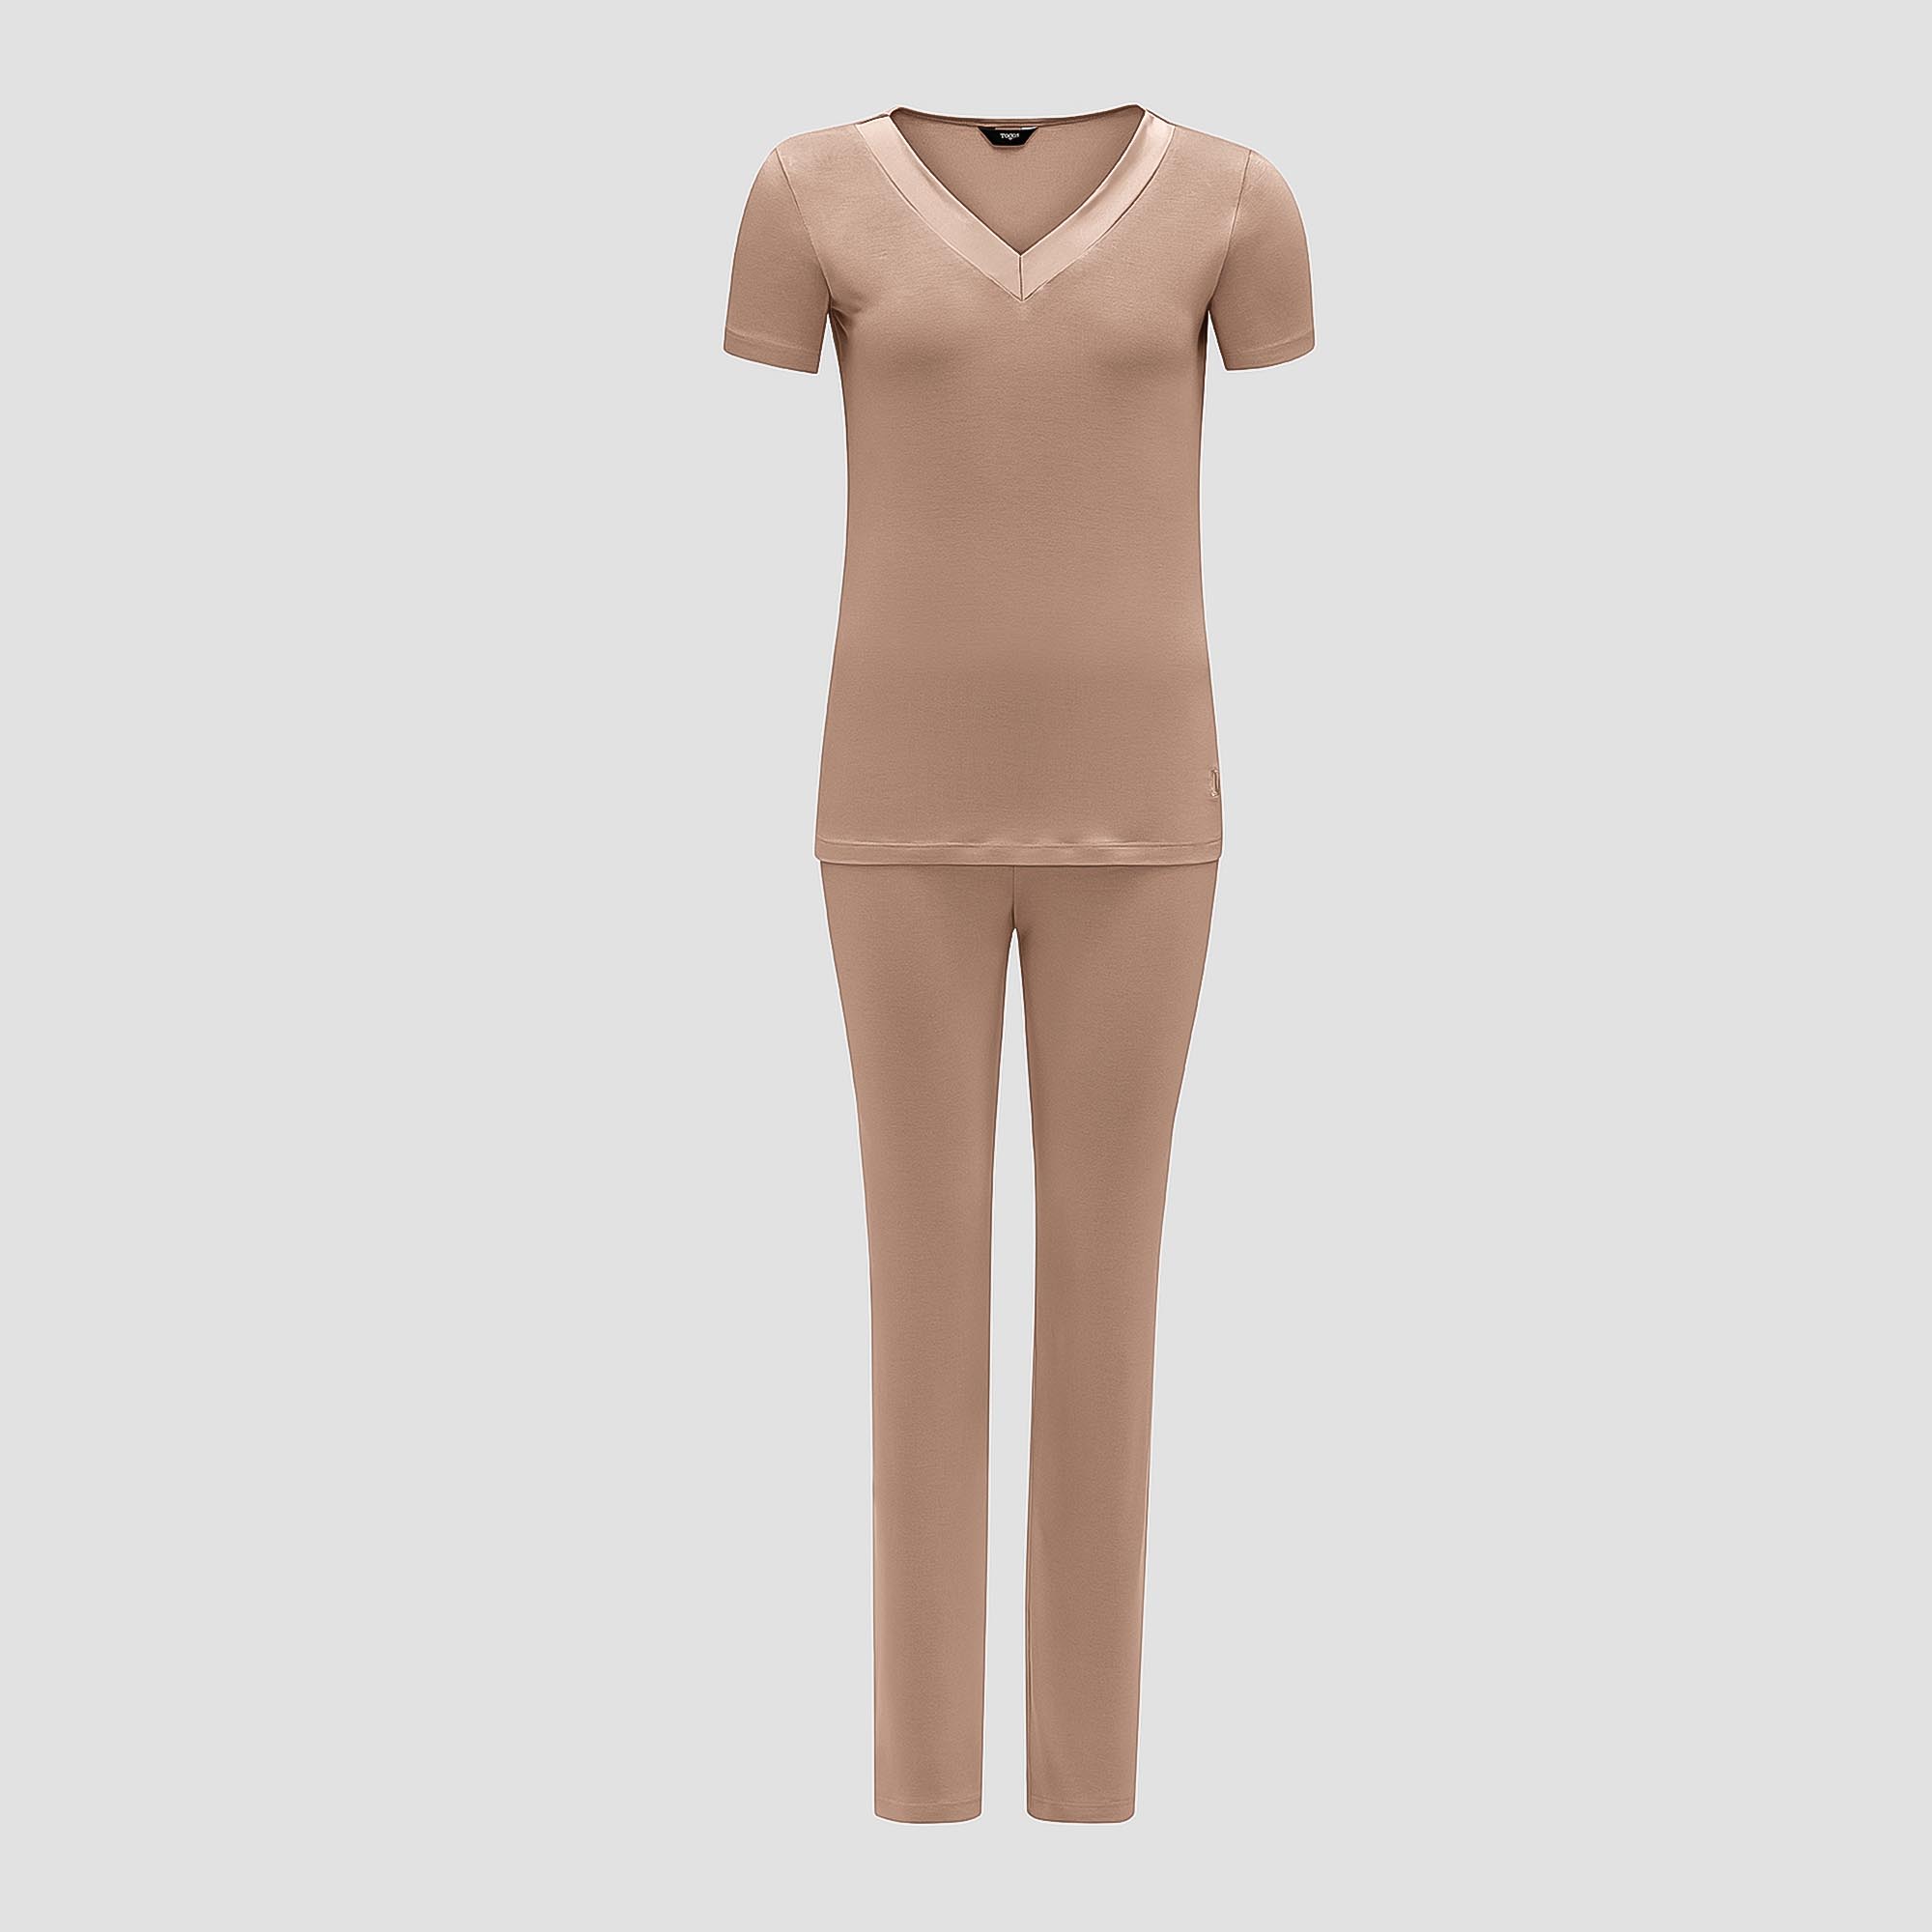 Пижама Togas Ингелла розово-бежевая женская XL(50) 2 предмета жен пижама долорес синий р 40